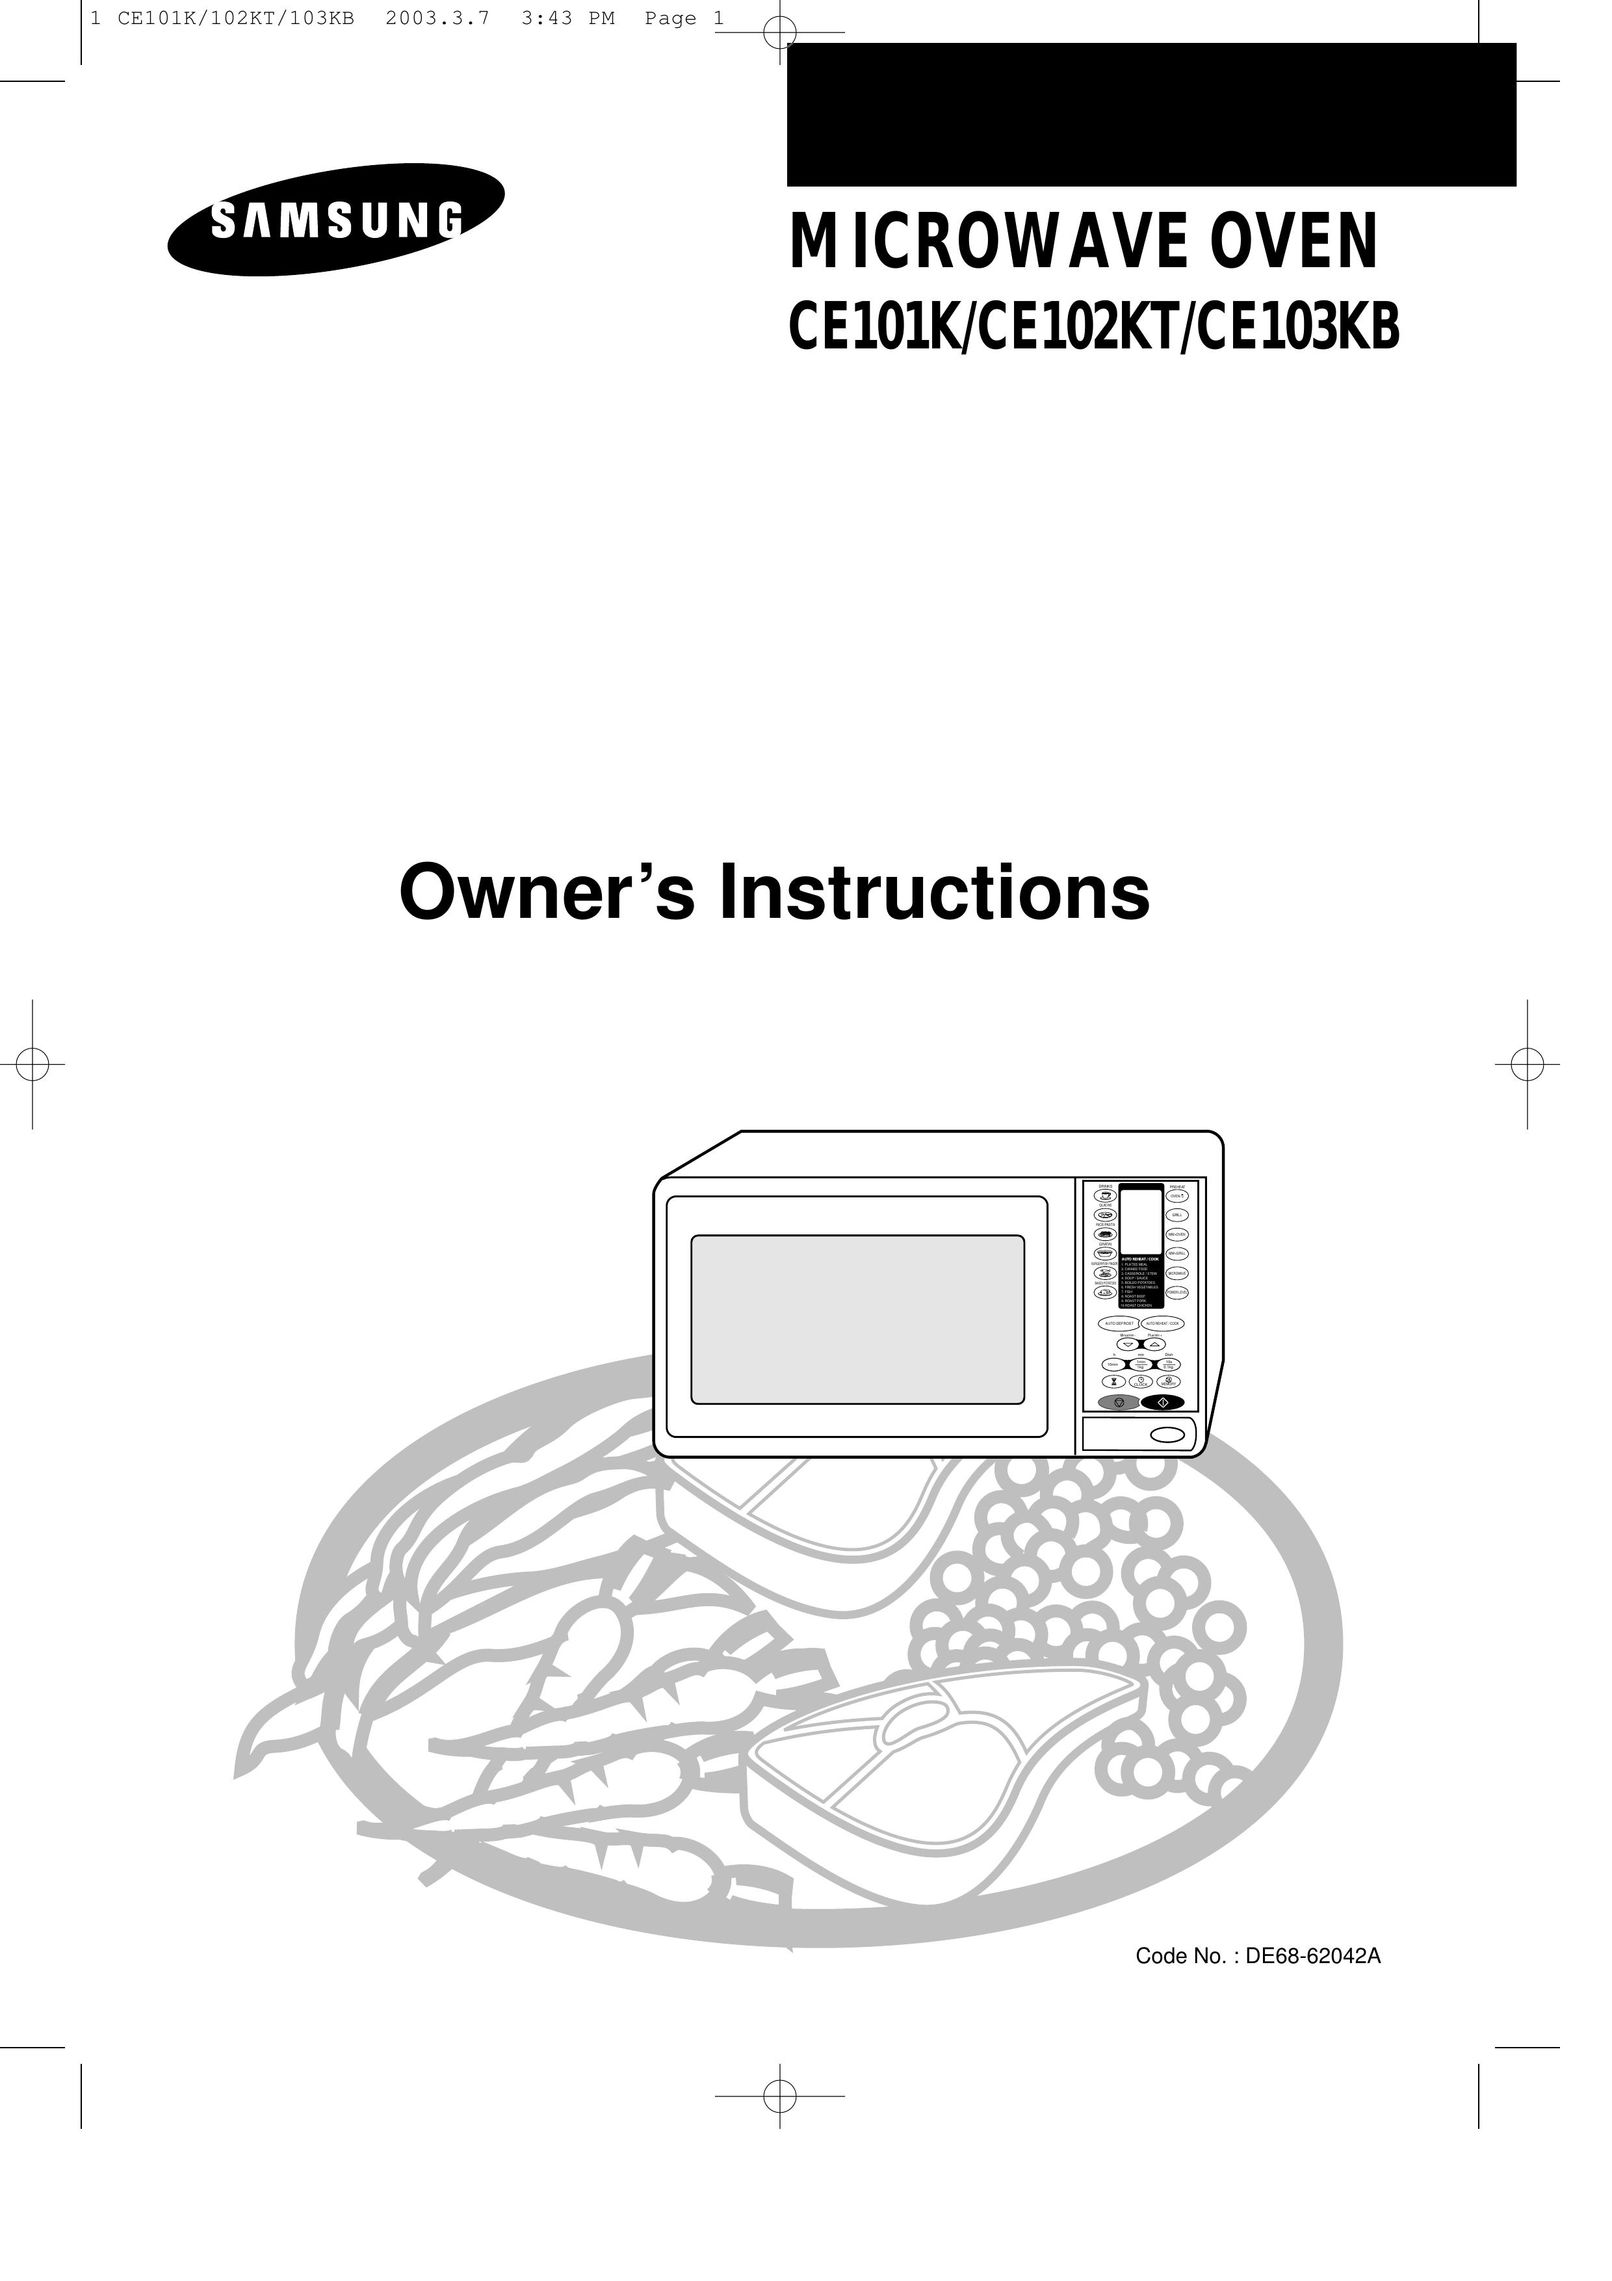 Samsung CE103KB Microwave Oven User Manual